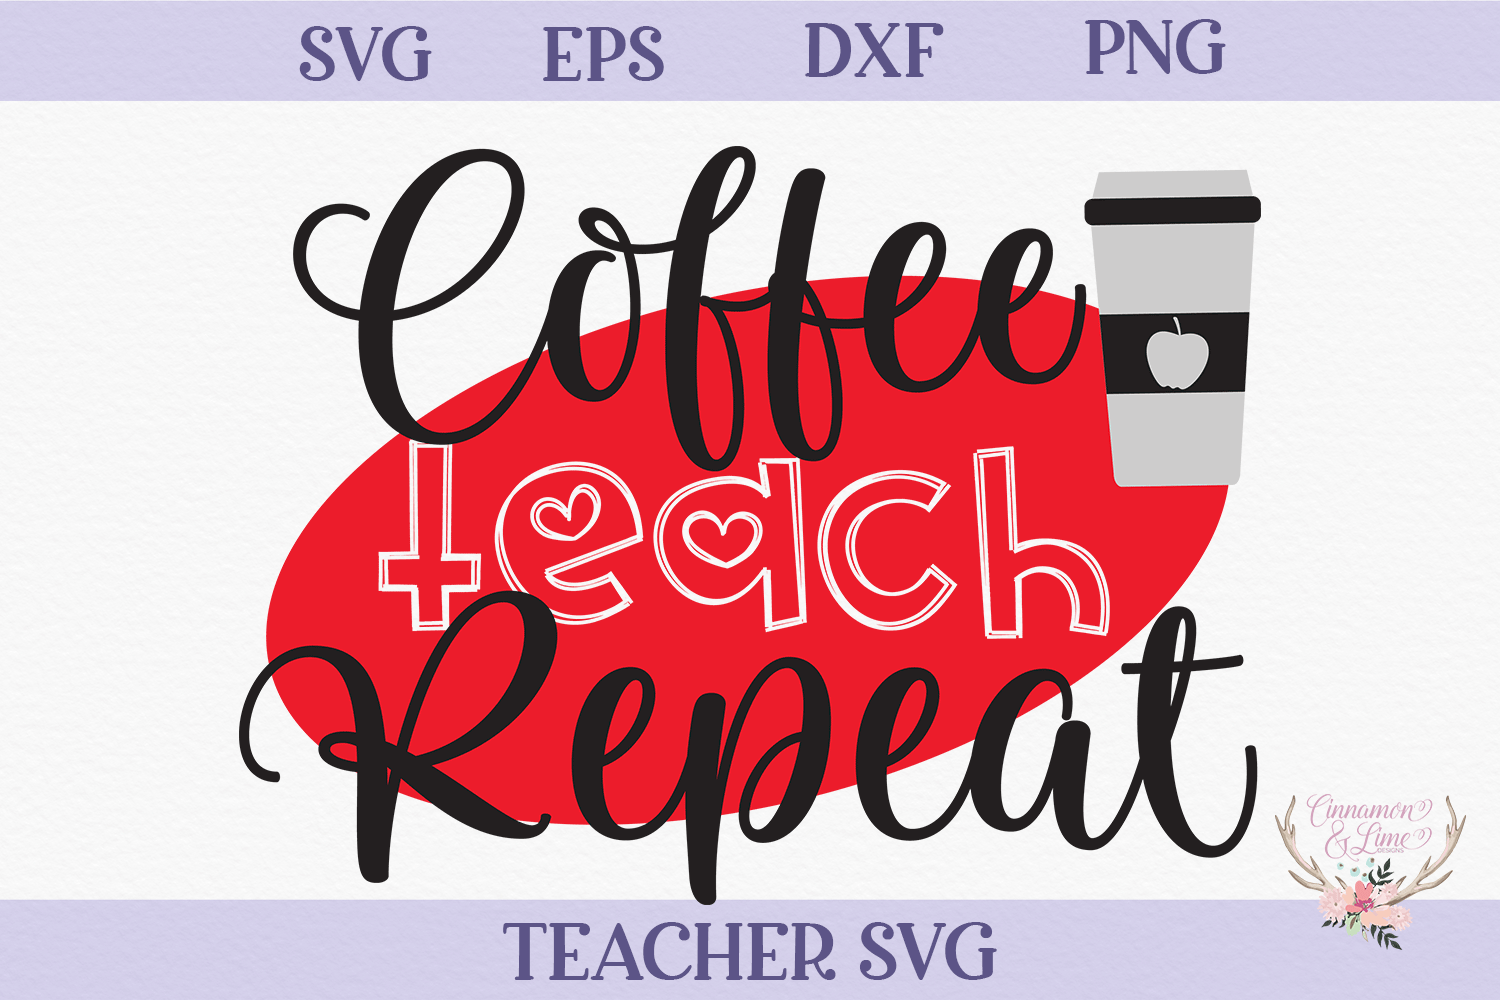 Download Teacher SVG - Coffee Teach Repeat (289565) | Cut Files ...